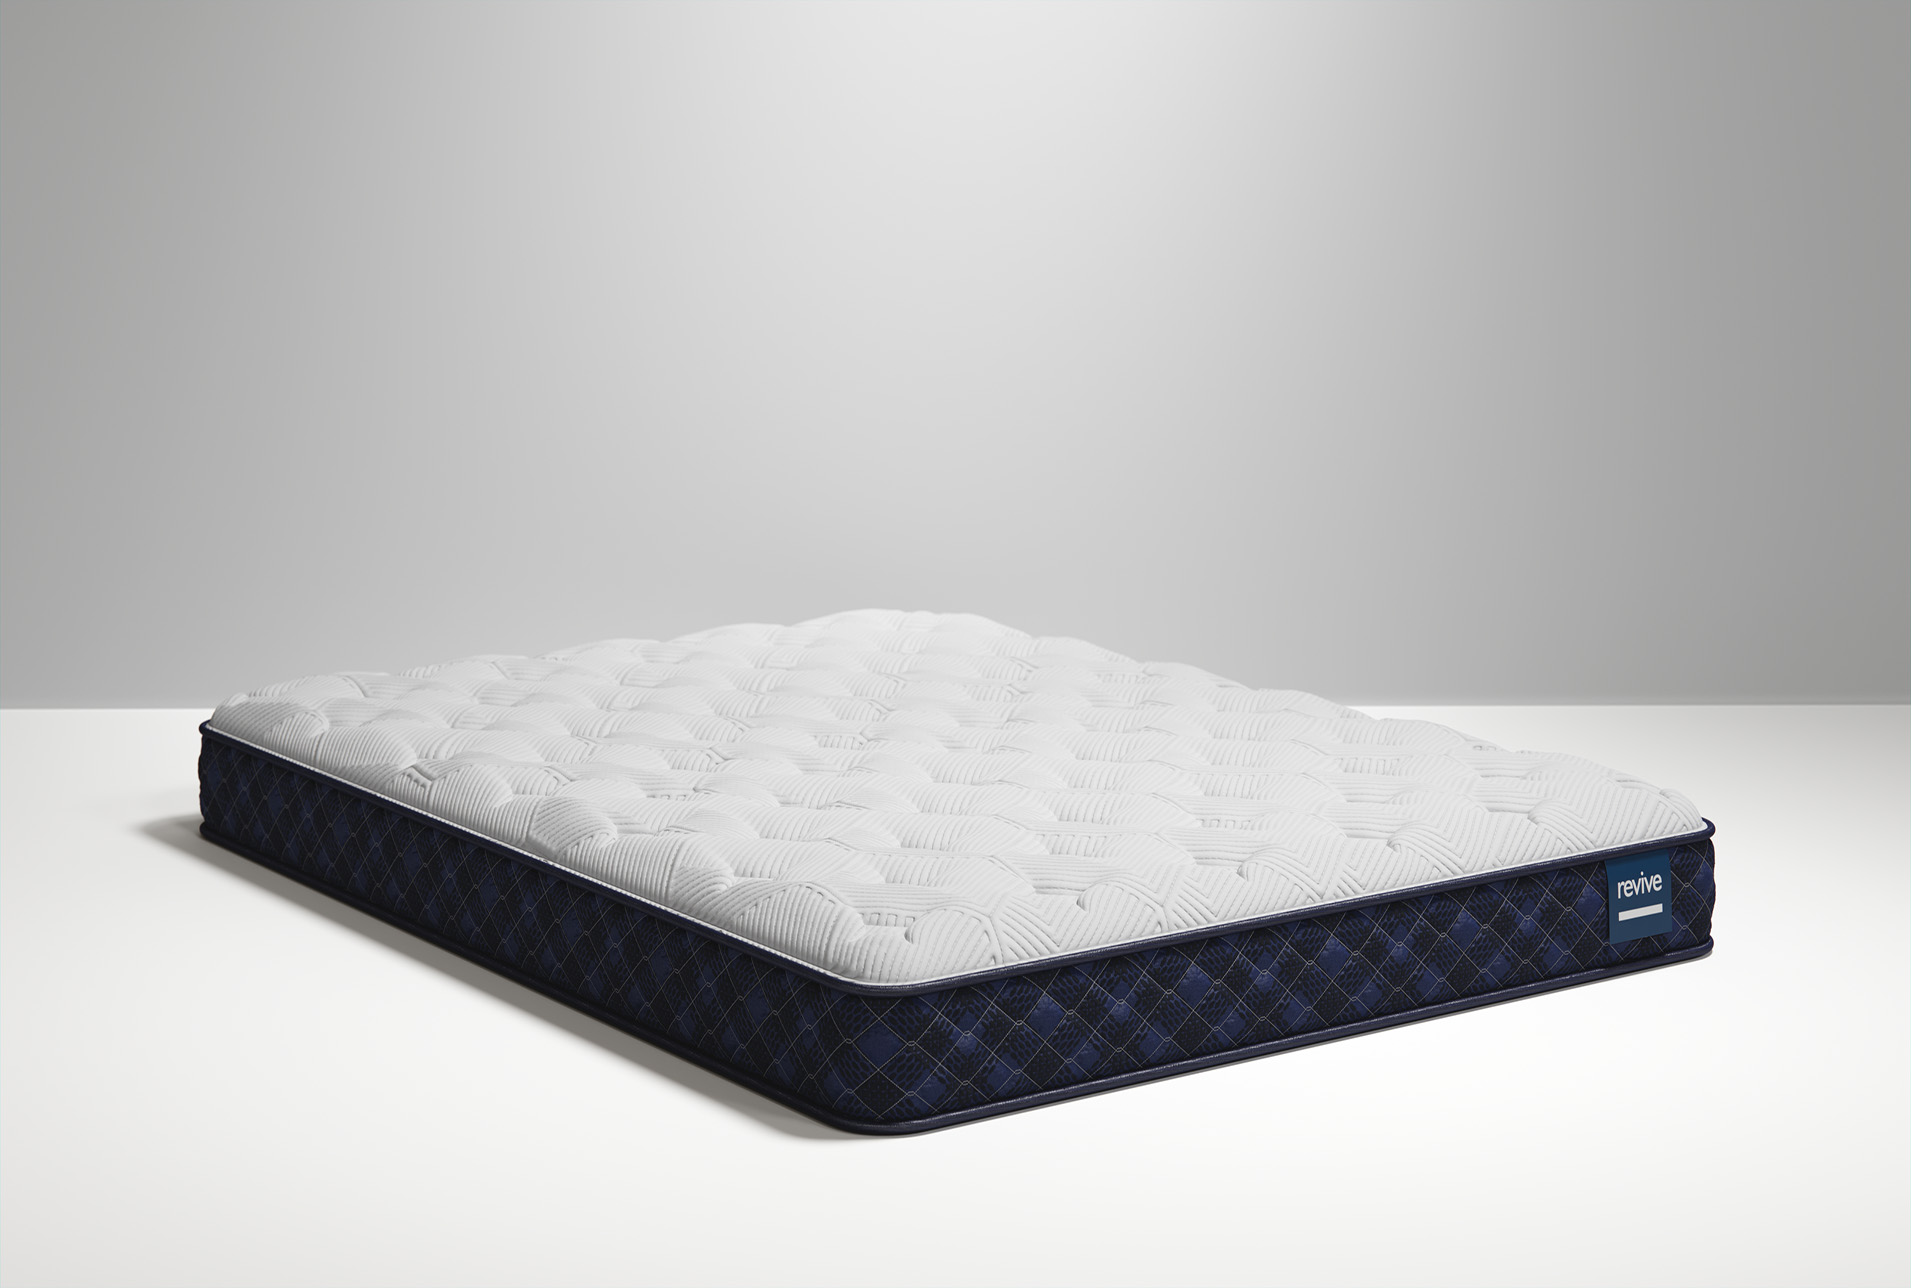 cheap twin mattresses for bunk beds